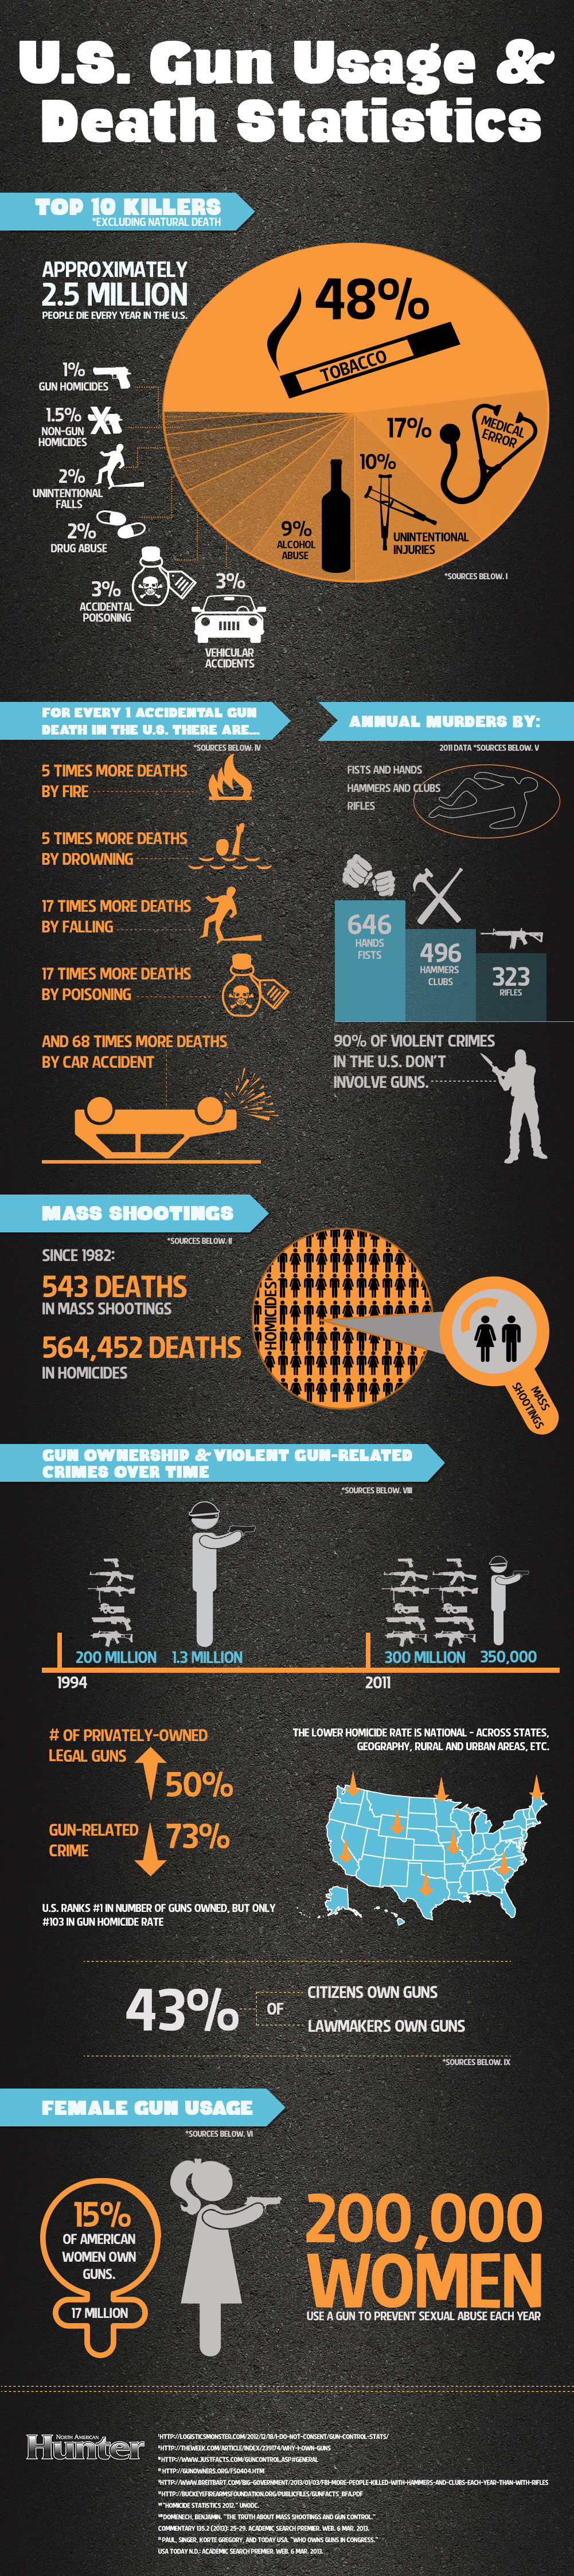 U.S. Gun Usage & Death Statistics]